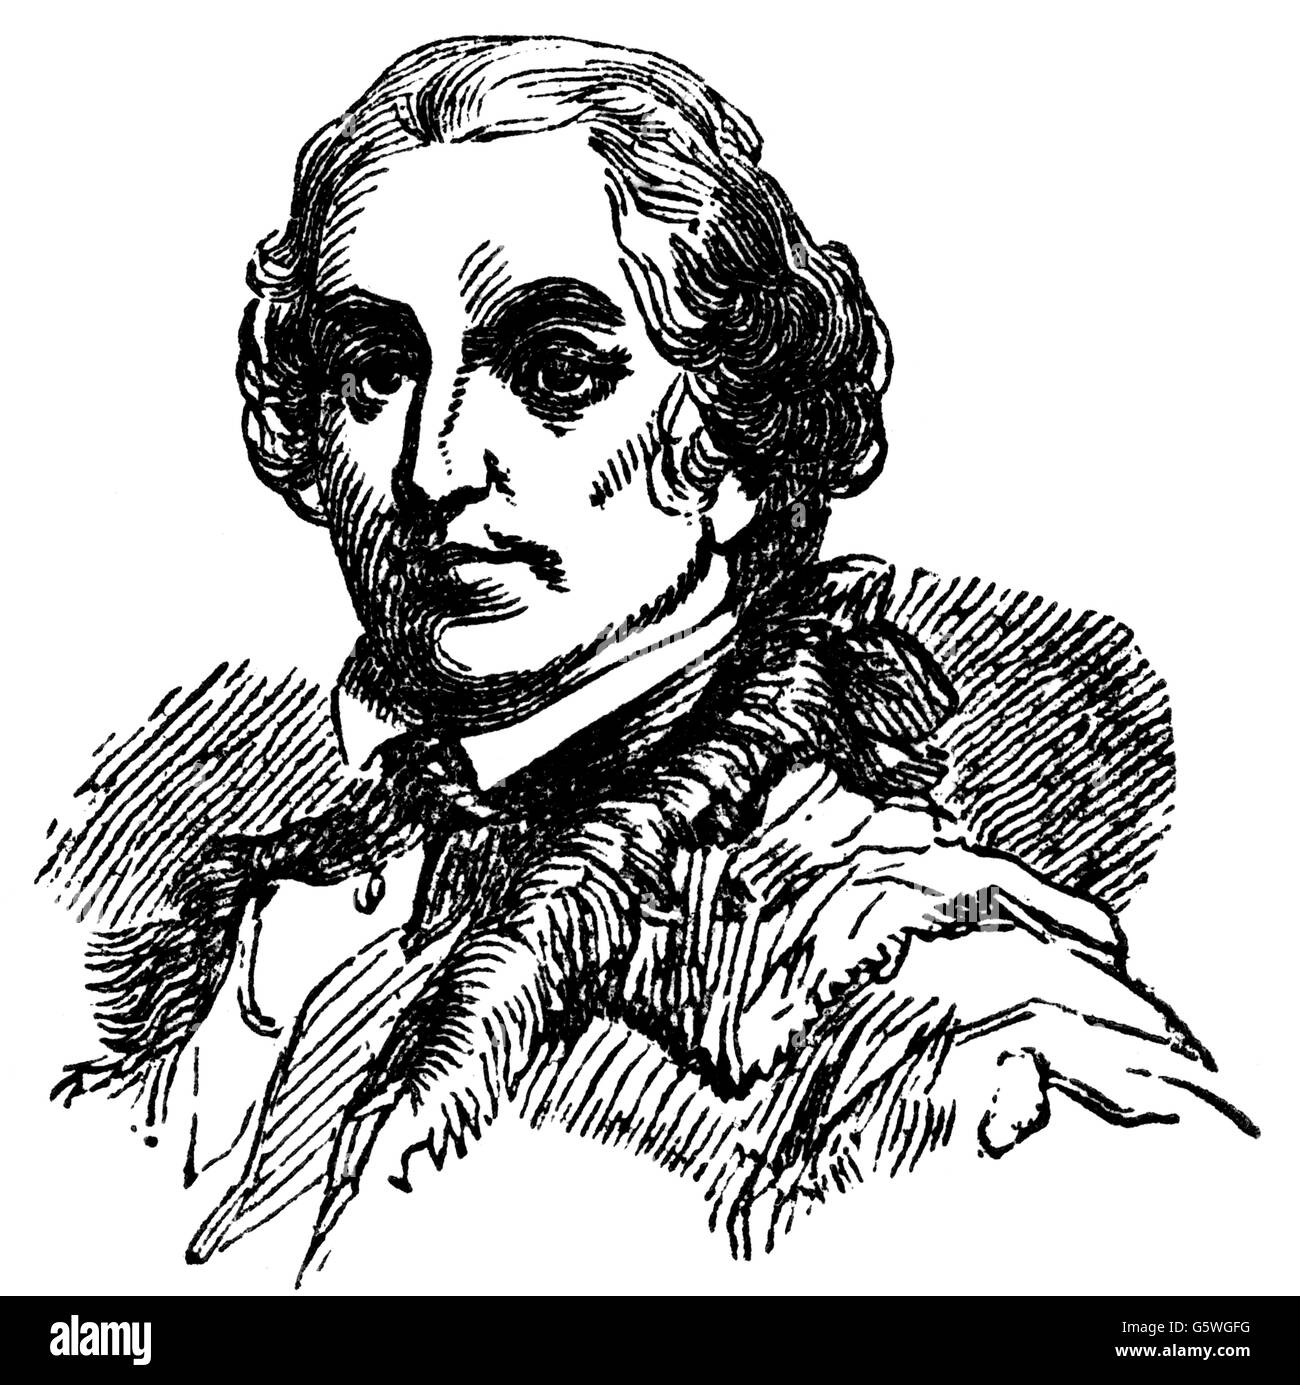 Morgan, Daniel, 6.7.1736 - 6.7.1806, American general and politician, portrait, wood engraving, 19th century, Stock Photo